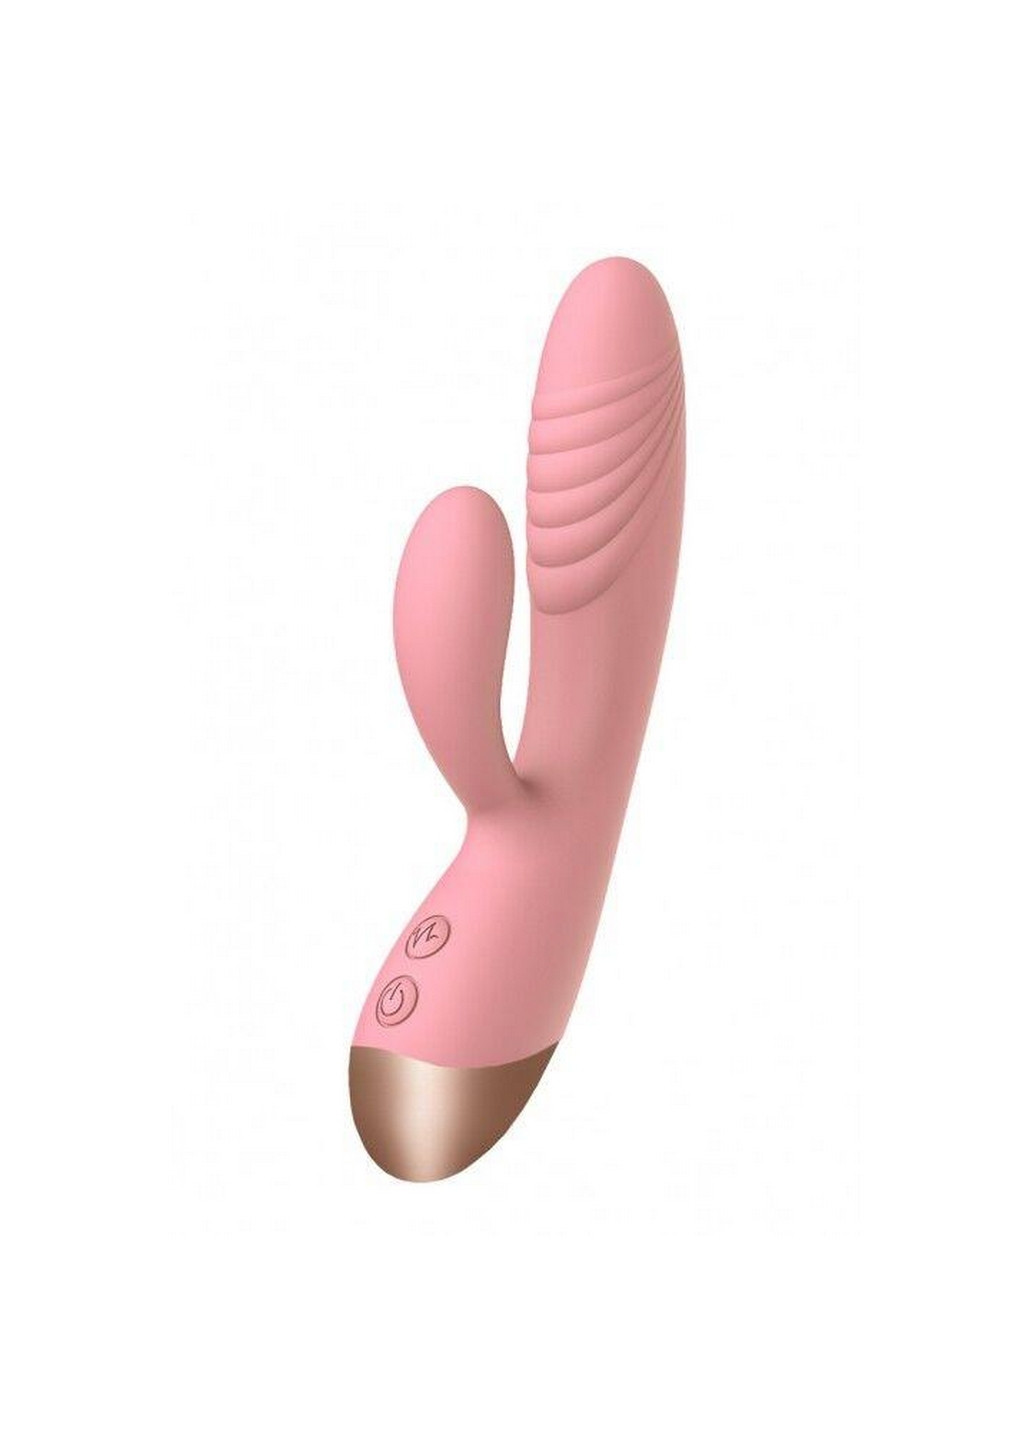 Вибратор-кролик Elali Pink Rabbit Vibrator No Brand (260413945)